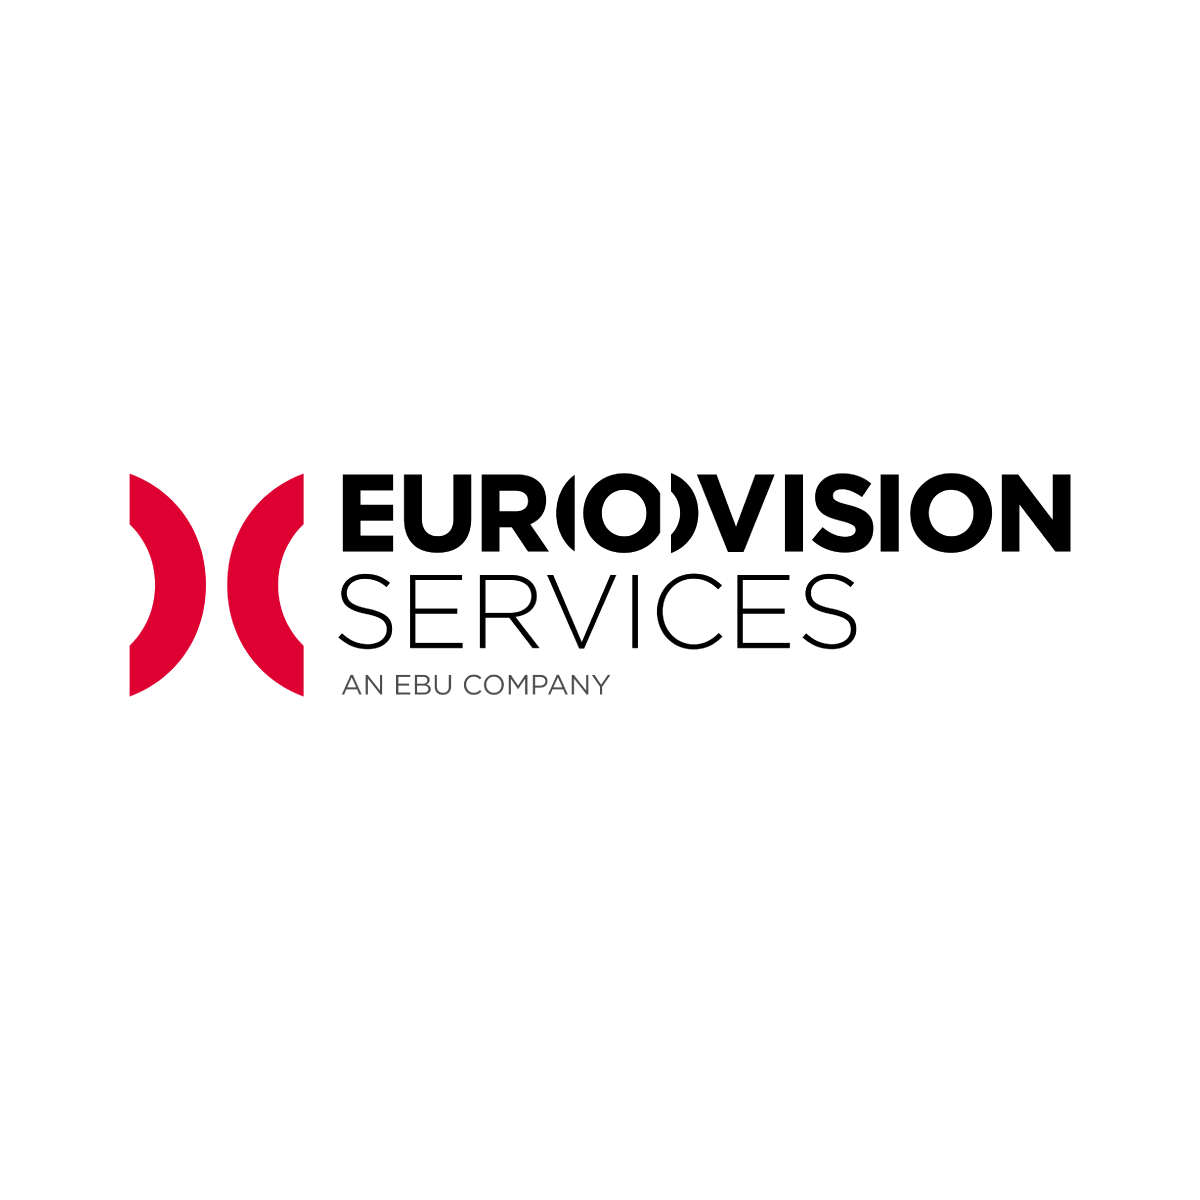 Eurovision Services